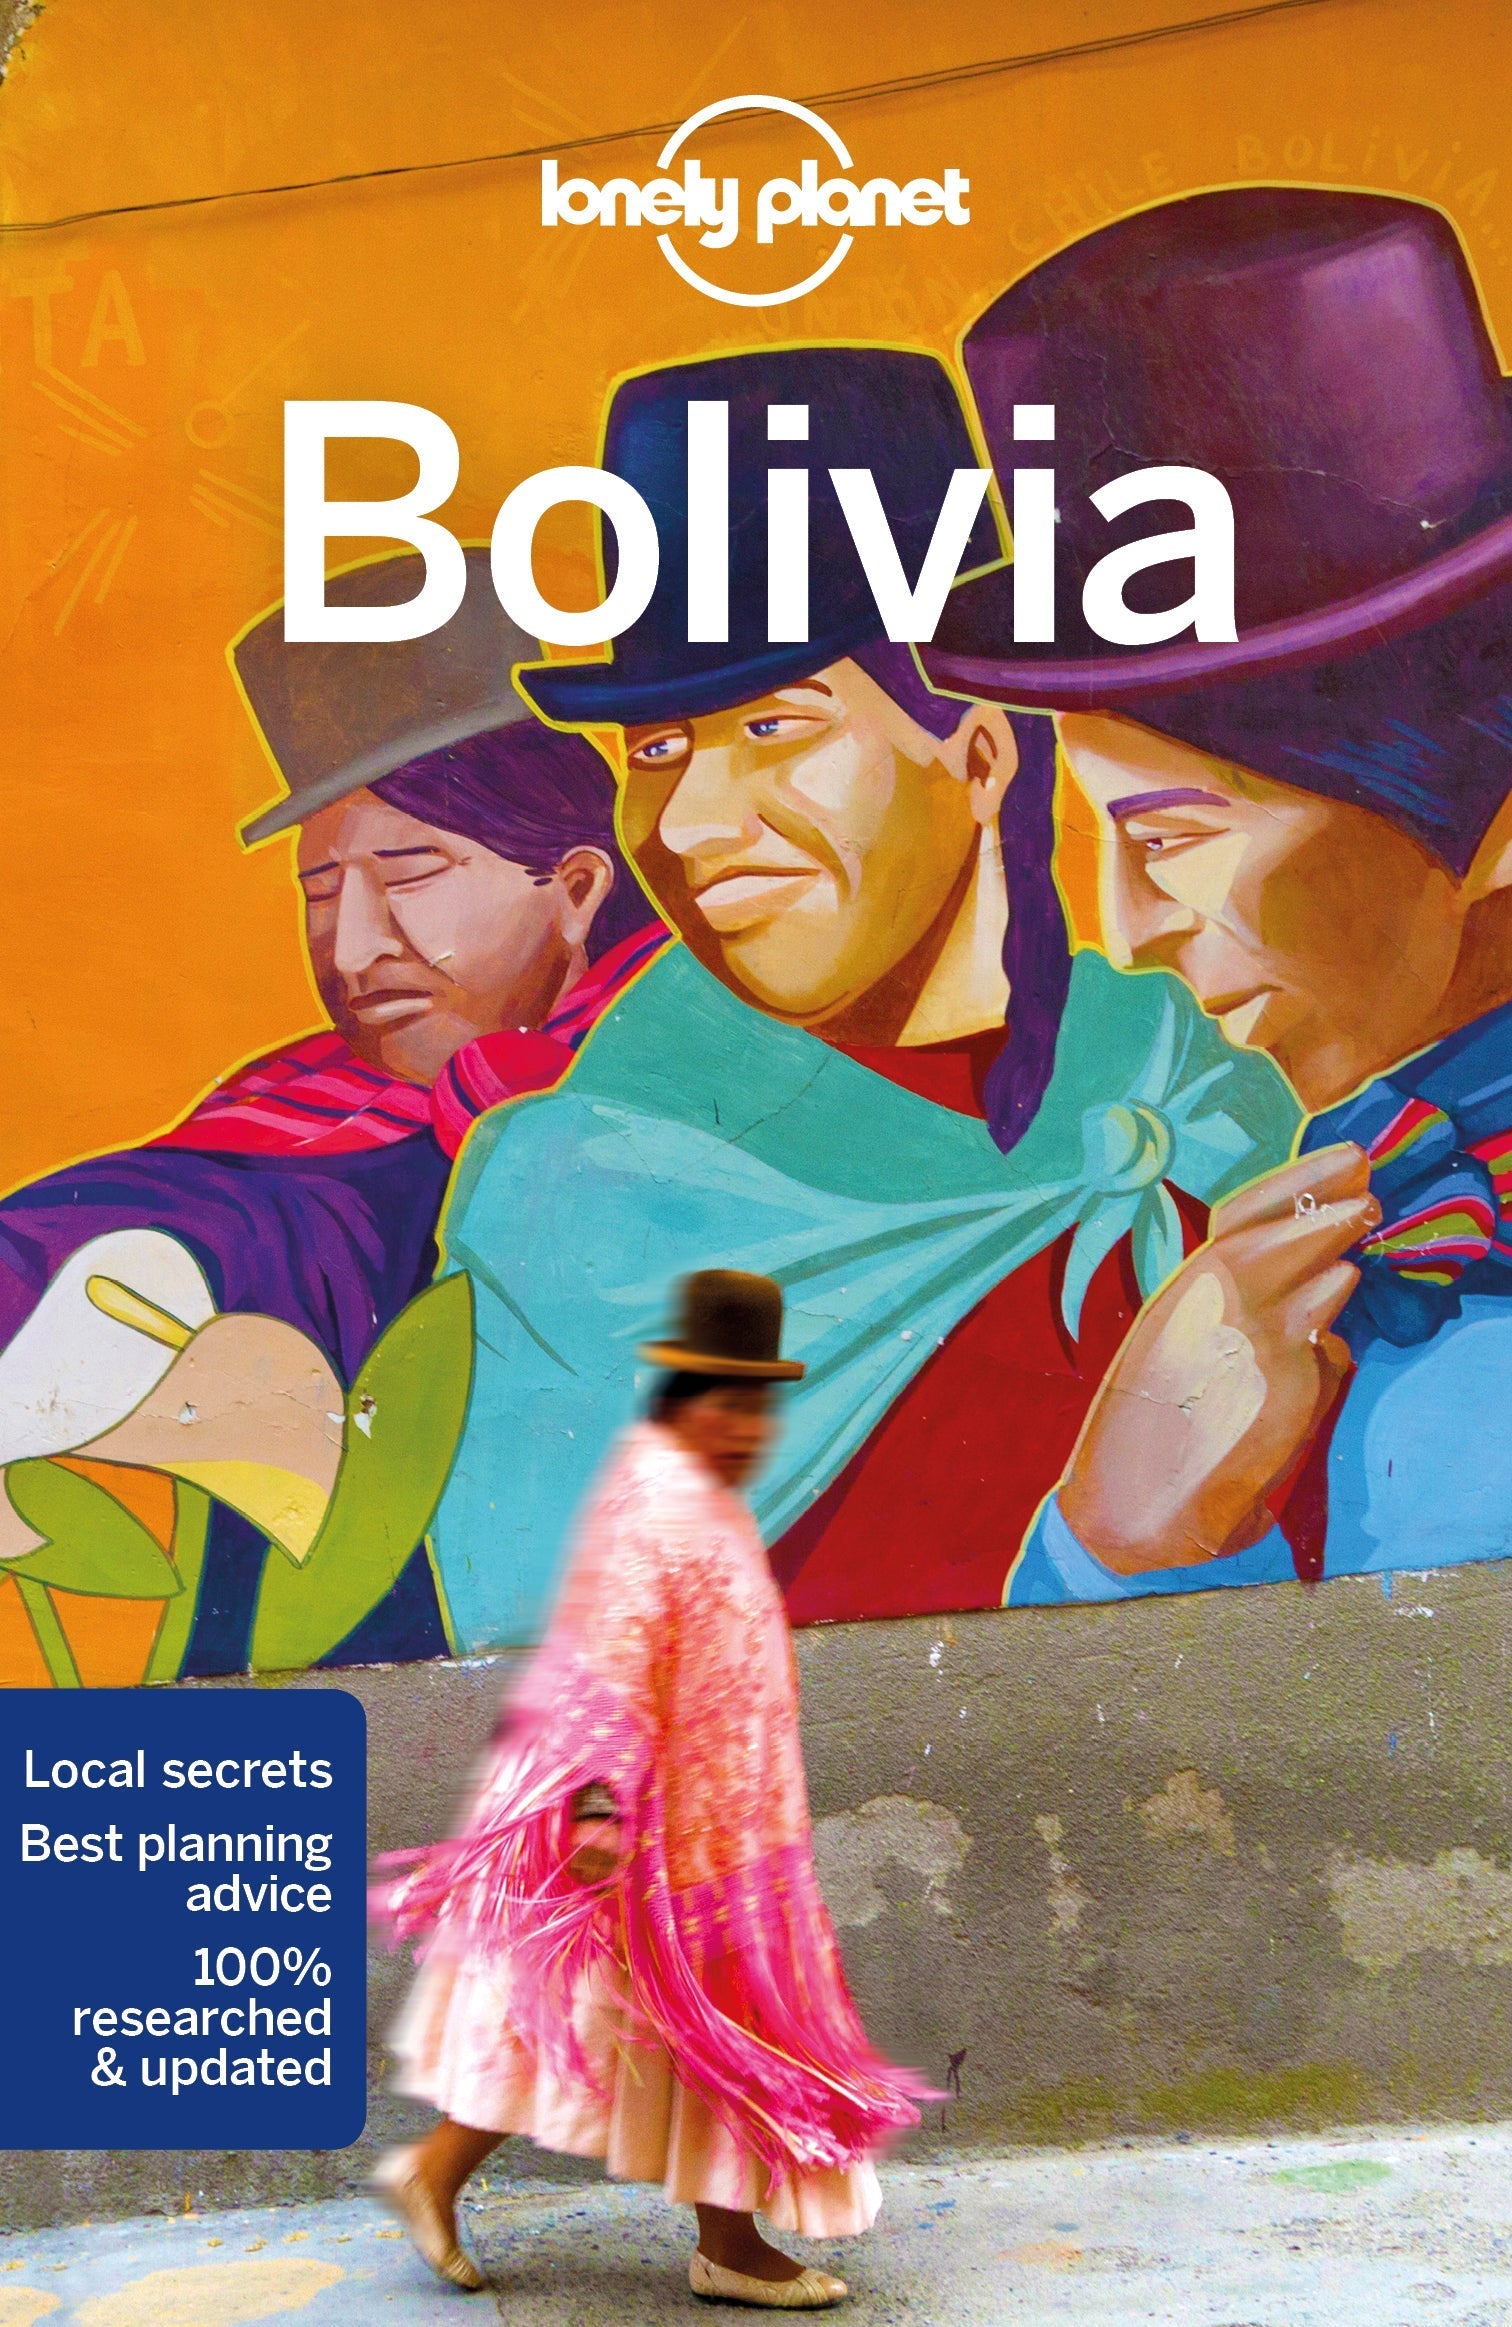 Bolivia - Book + eBook